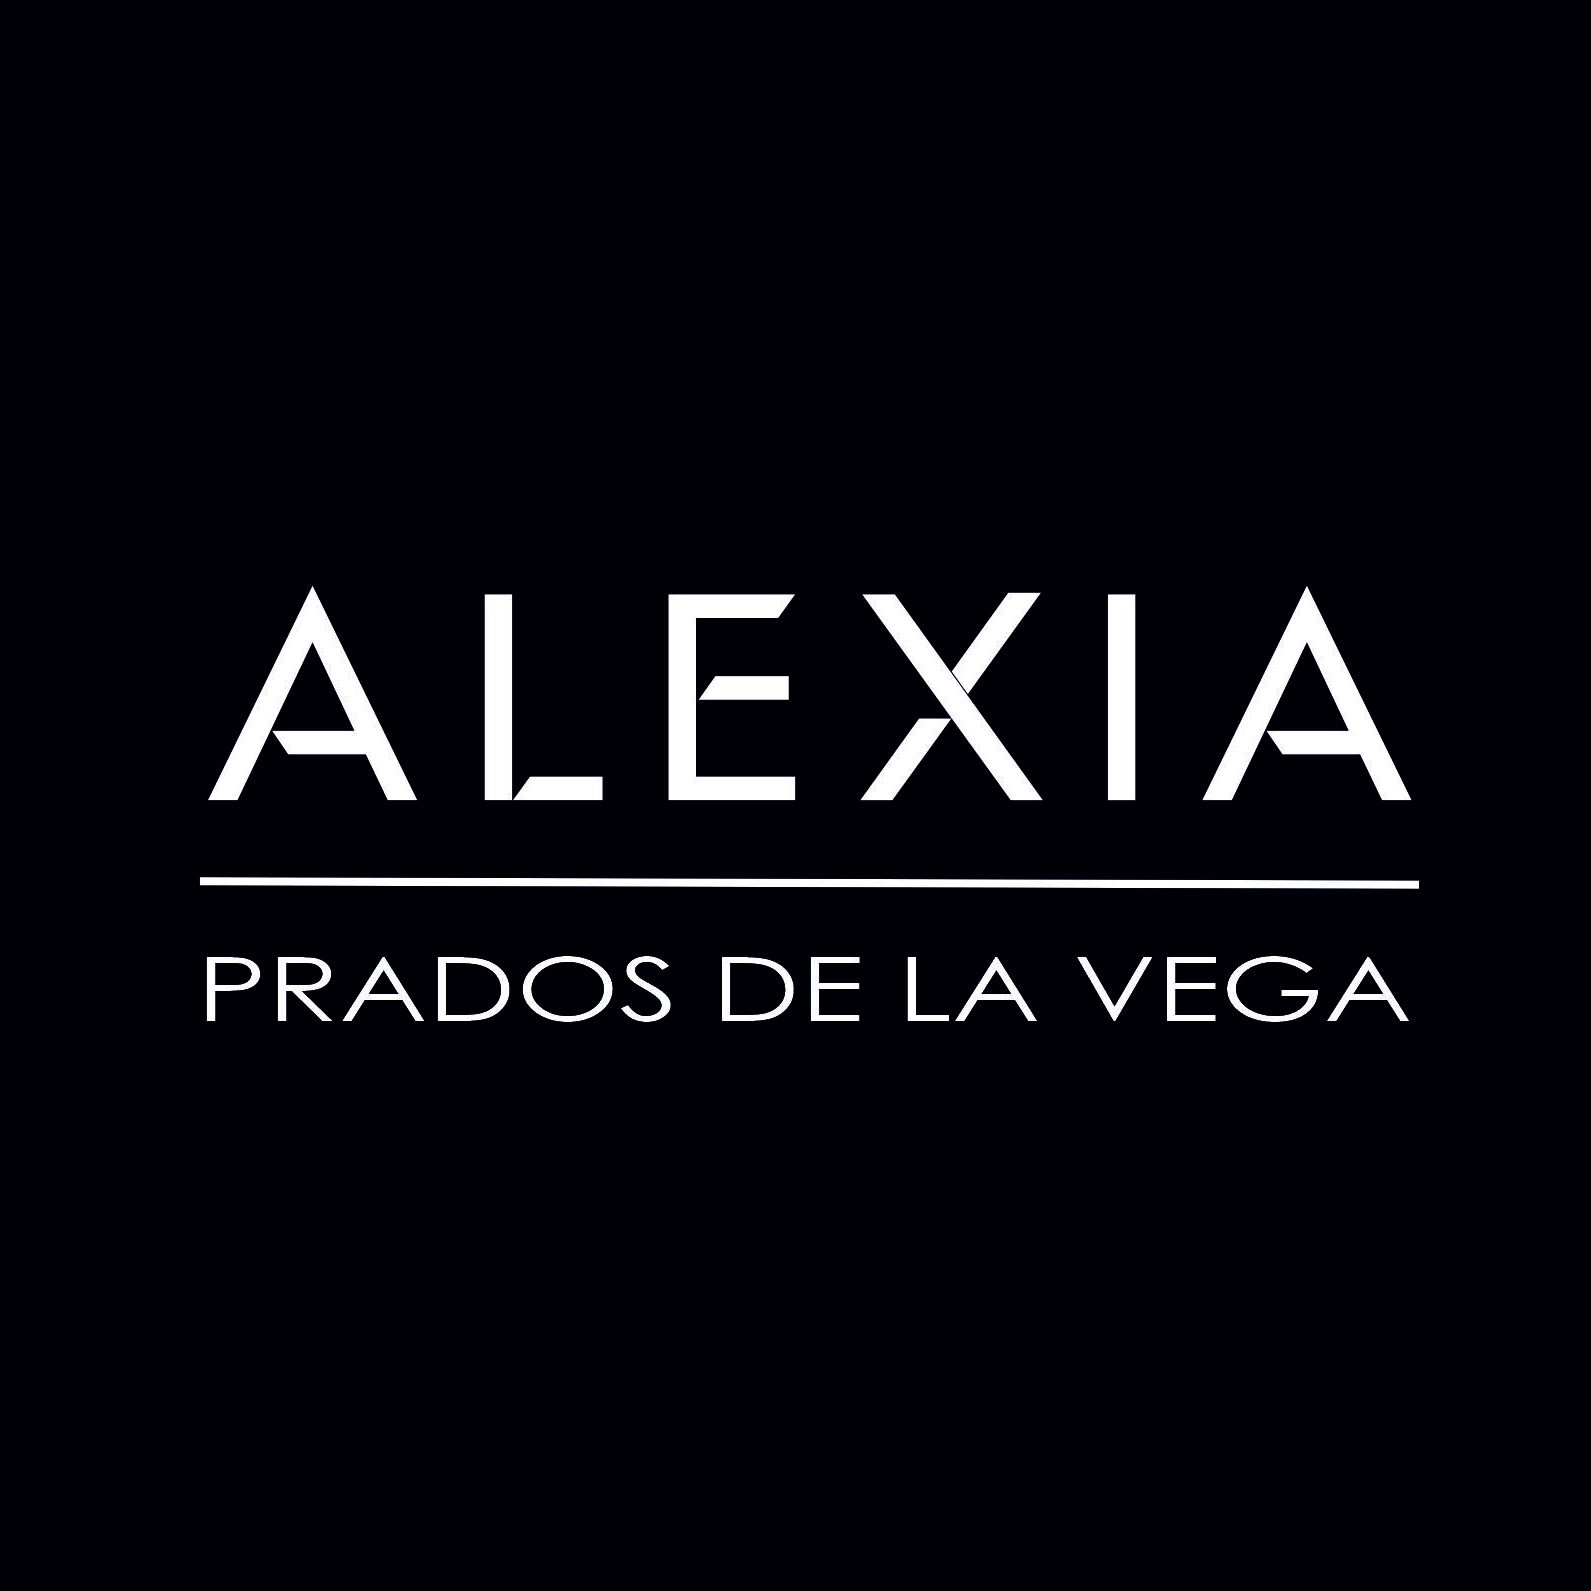 Alexia Prados de la Vega Logotipo